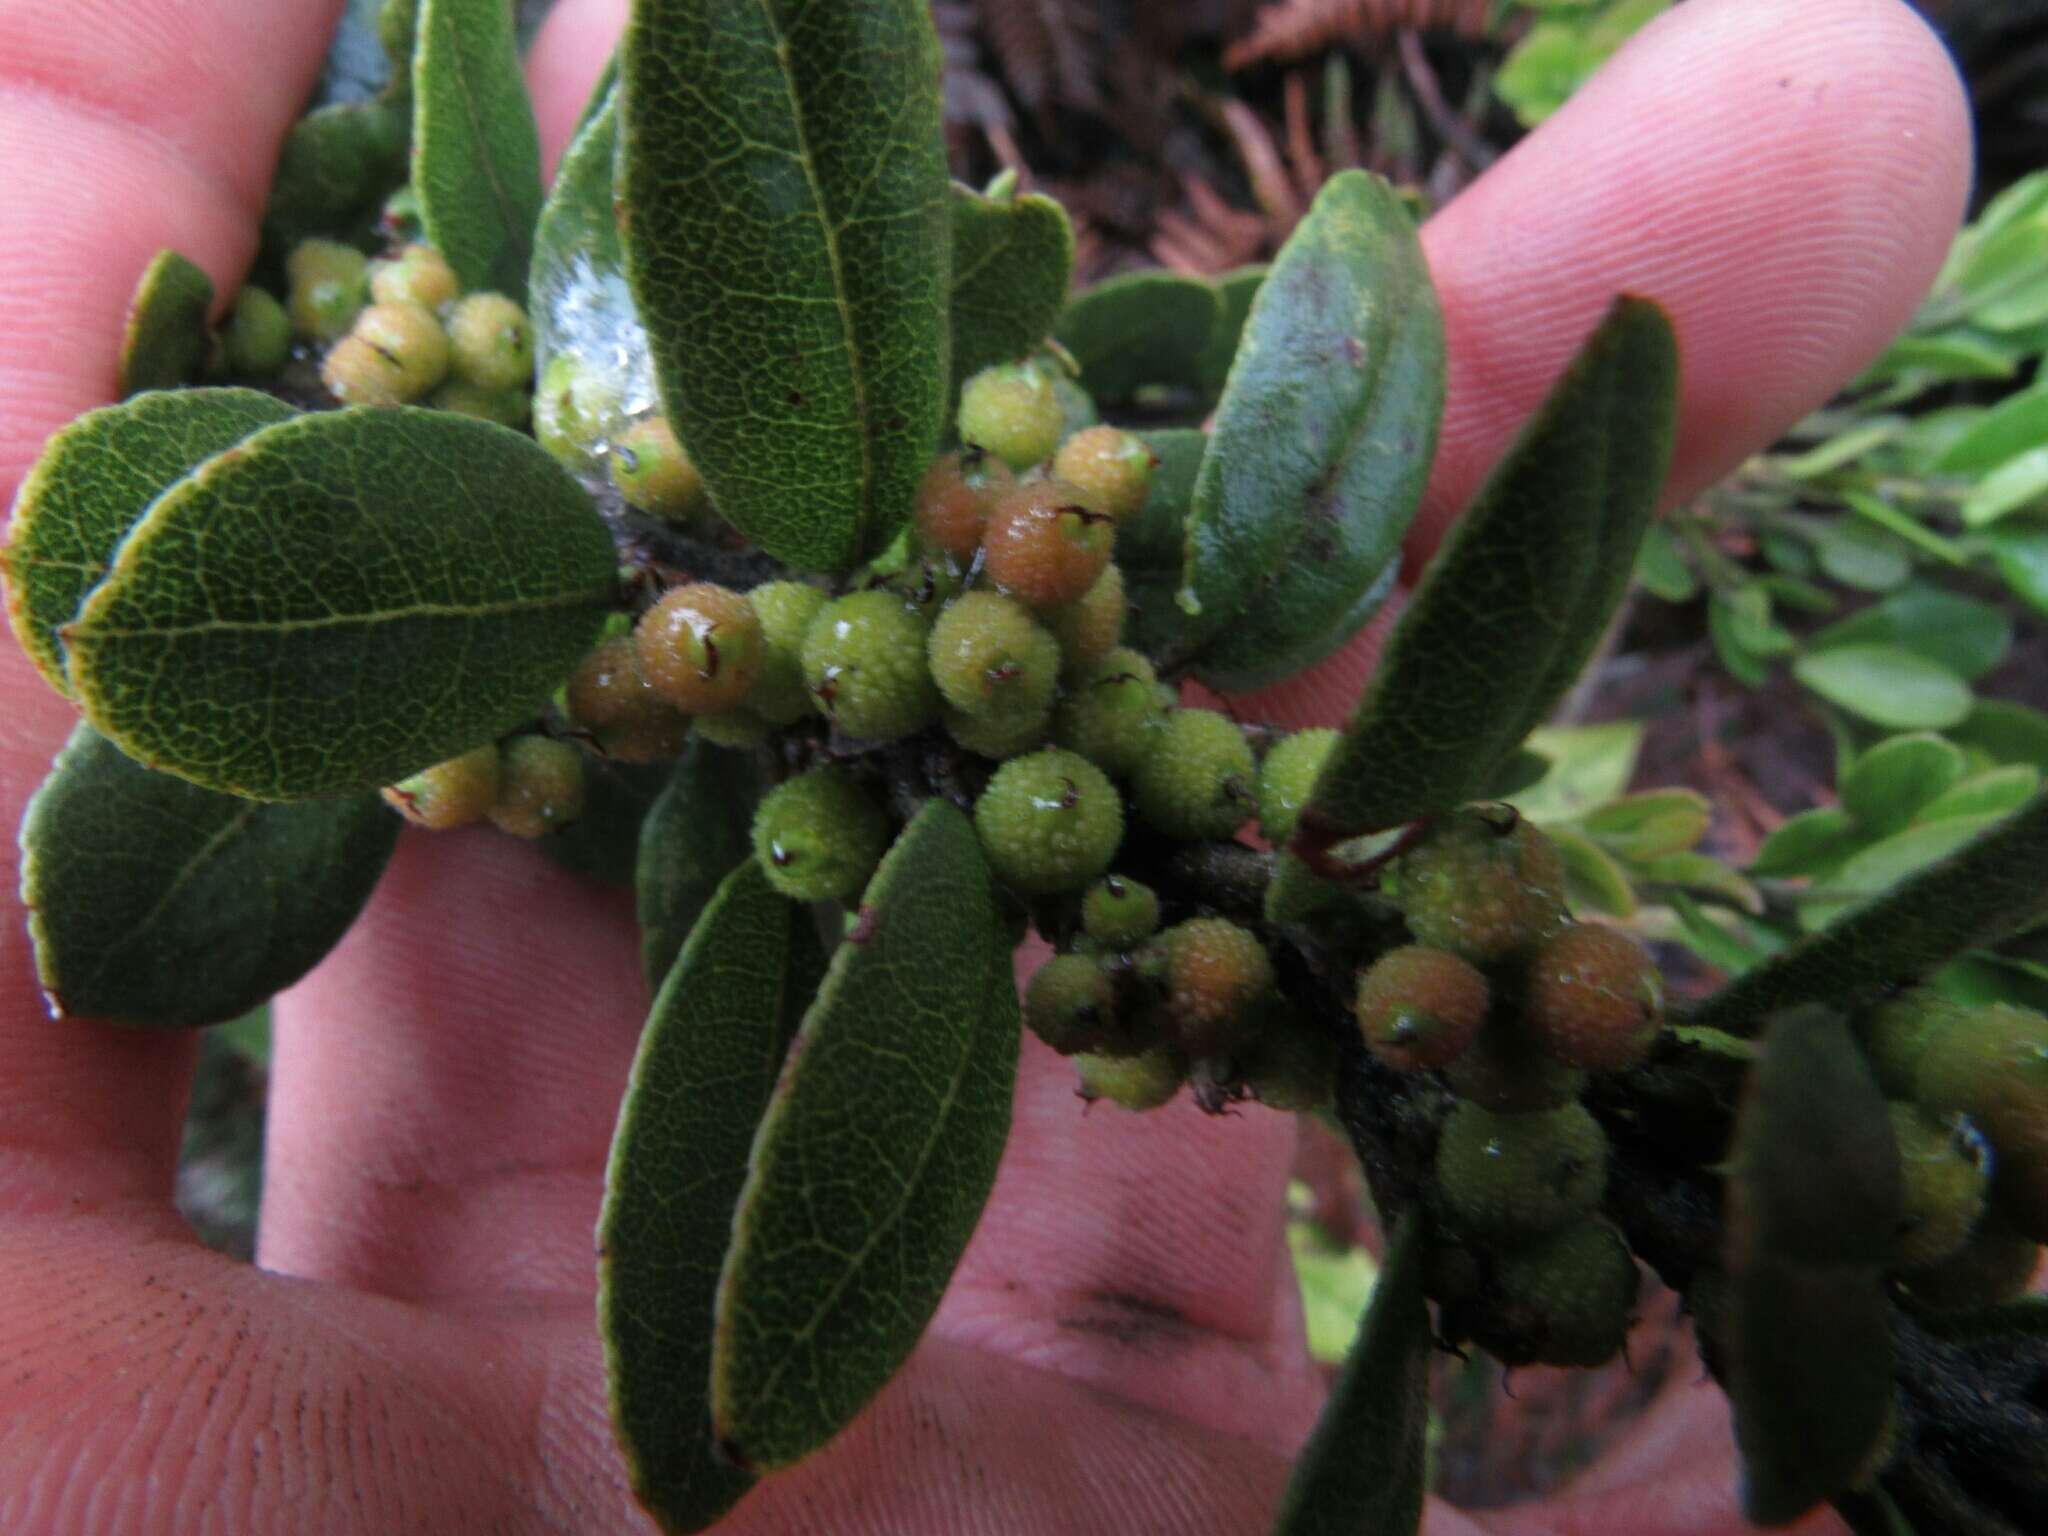 Image of Morella parvifolia (Benth.) Parra-Os.